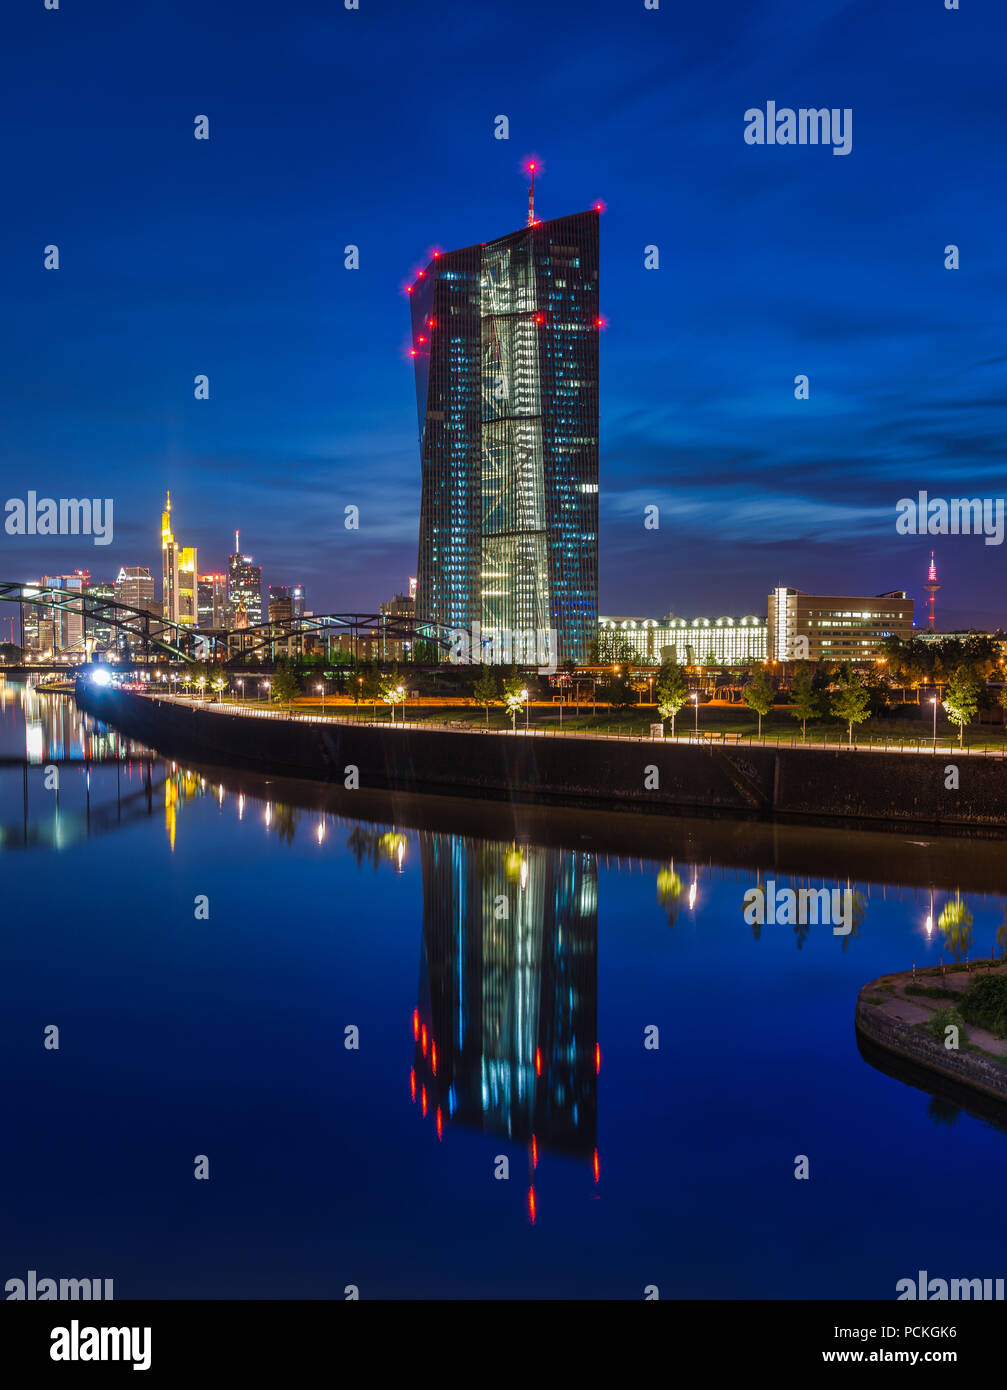 Banca centrale europea BCE, di notte davanti a la skyline illuminato, Osthafenbrücke, Frankfurt am Main, Hesse, Germania Foto Stock